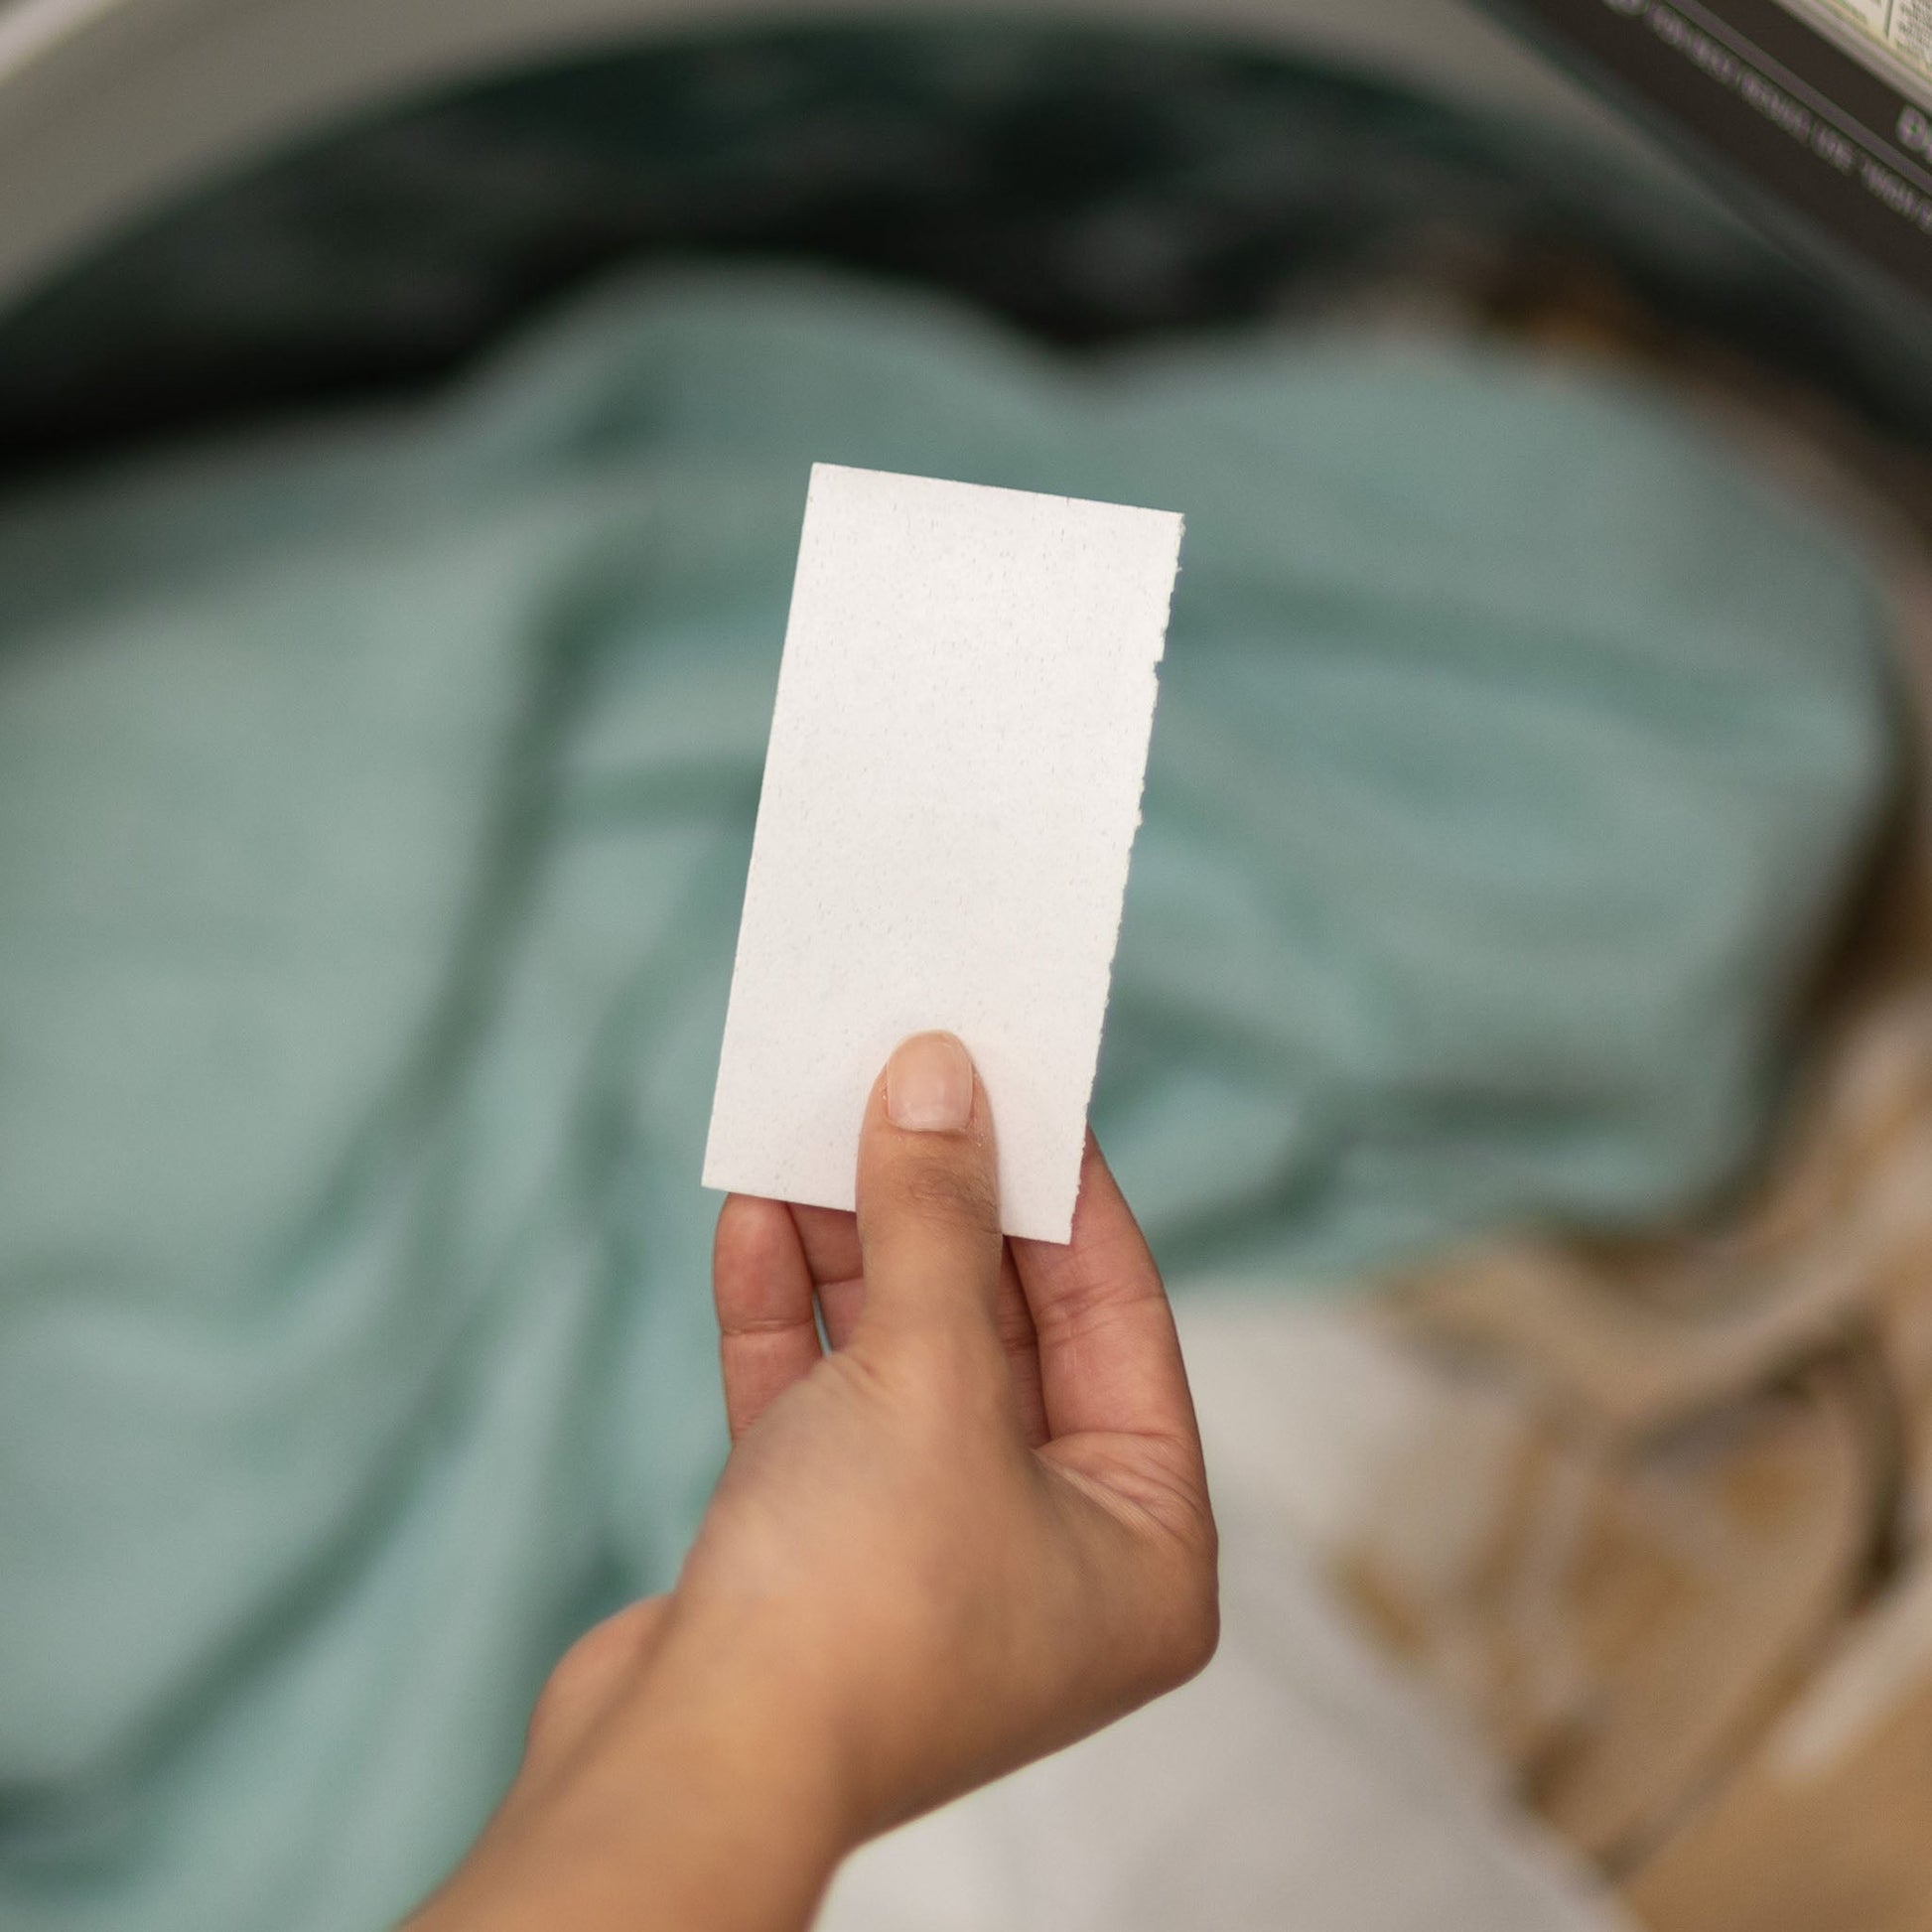 Tru Earth Eco-Strips Laundry Detergent - Fresh Linen / 384 Strips